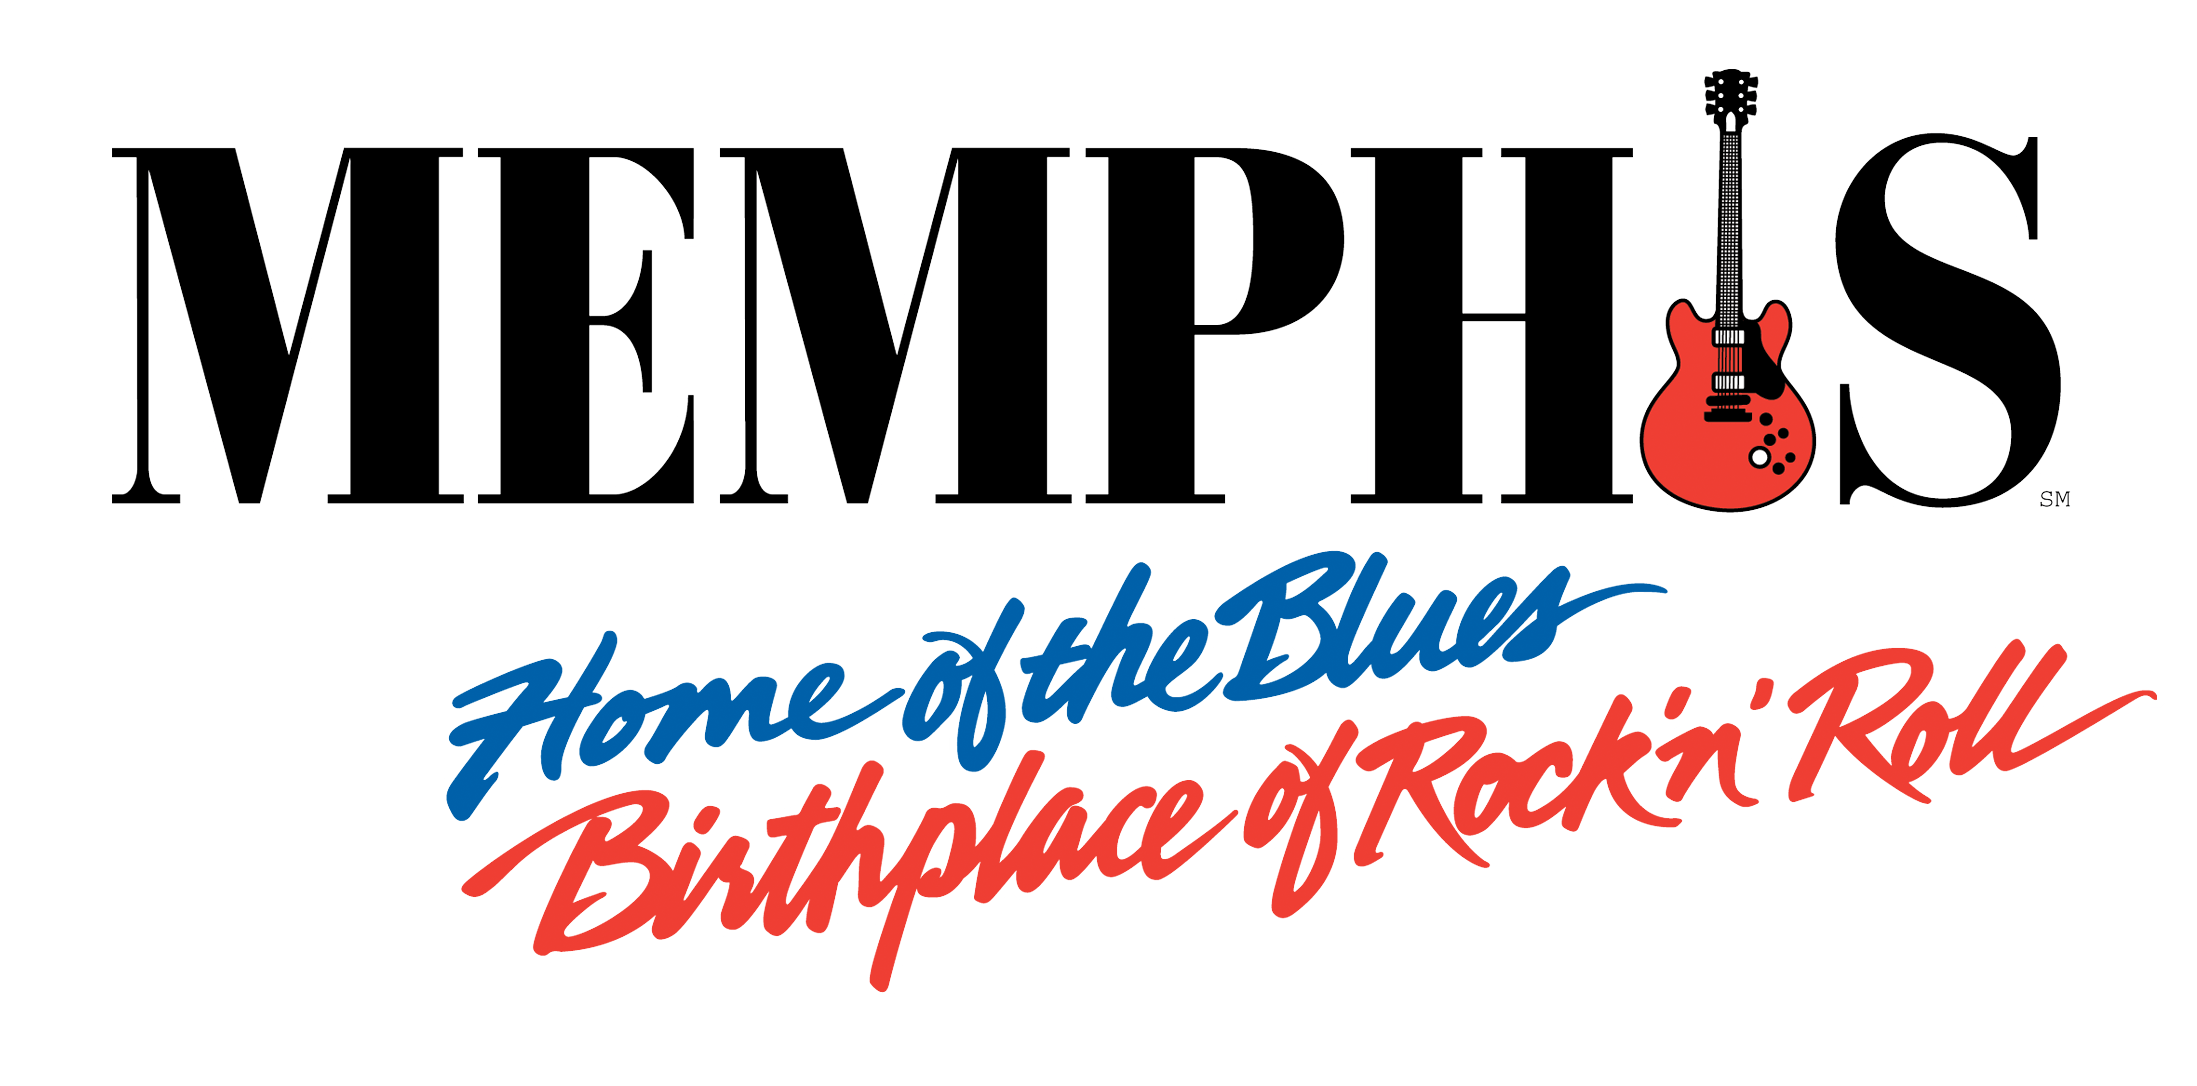 Memphis Logo - mc memphis travel logo w white